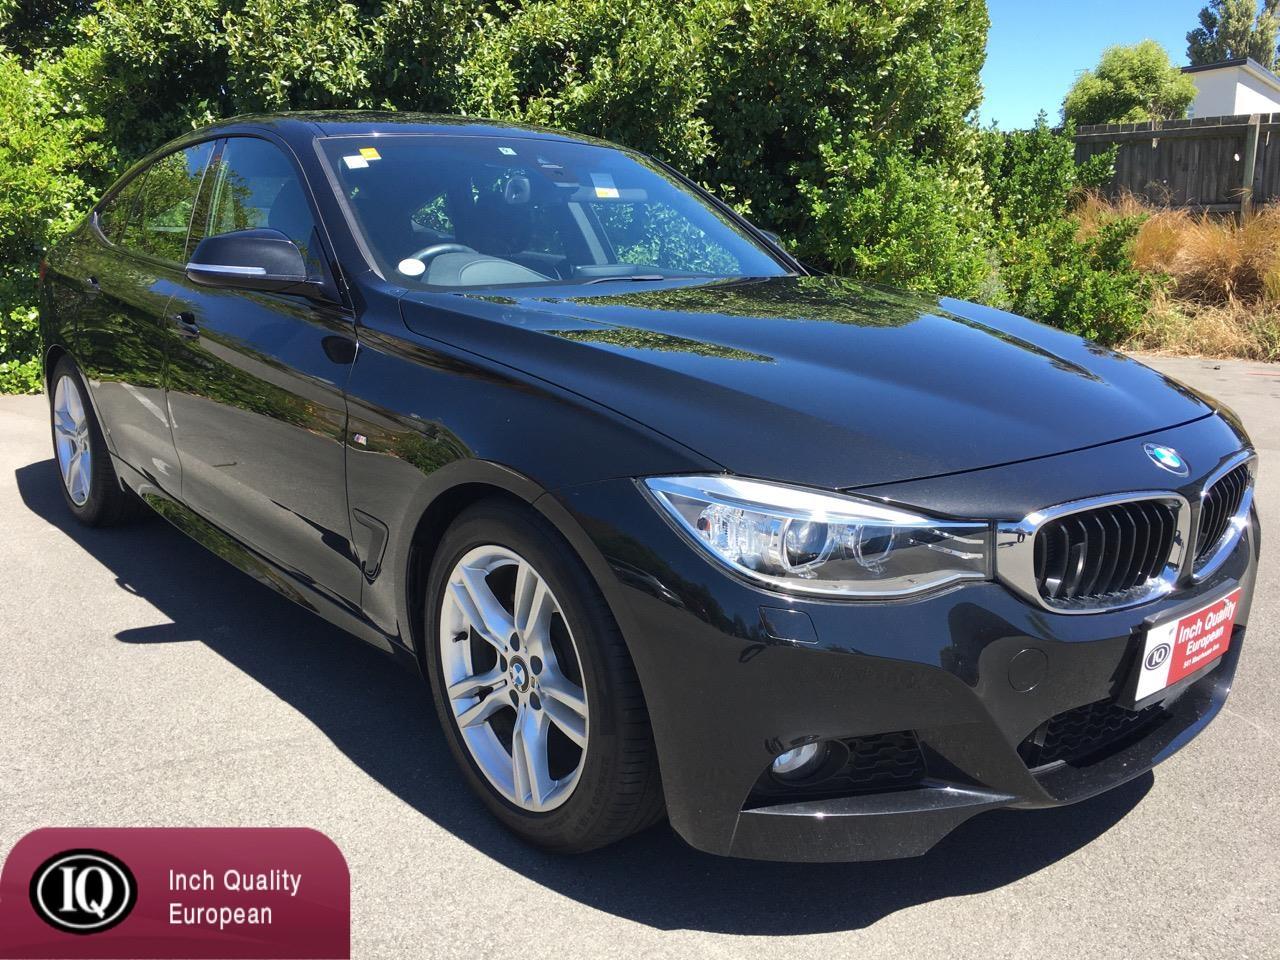 image-0, 2014 BMW 320i M Sport Grand Turismo at Christchurch